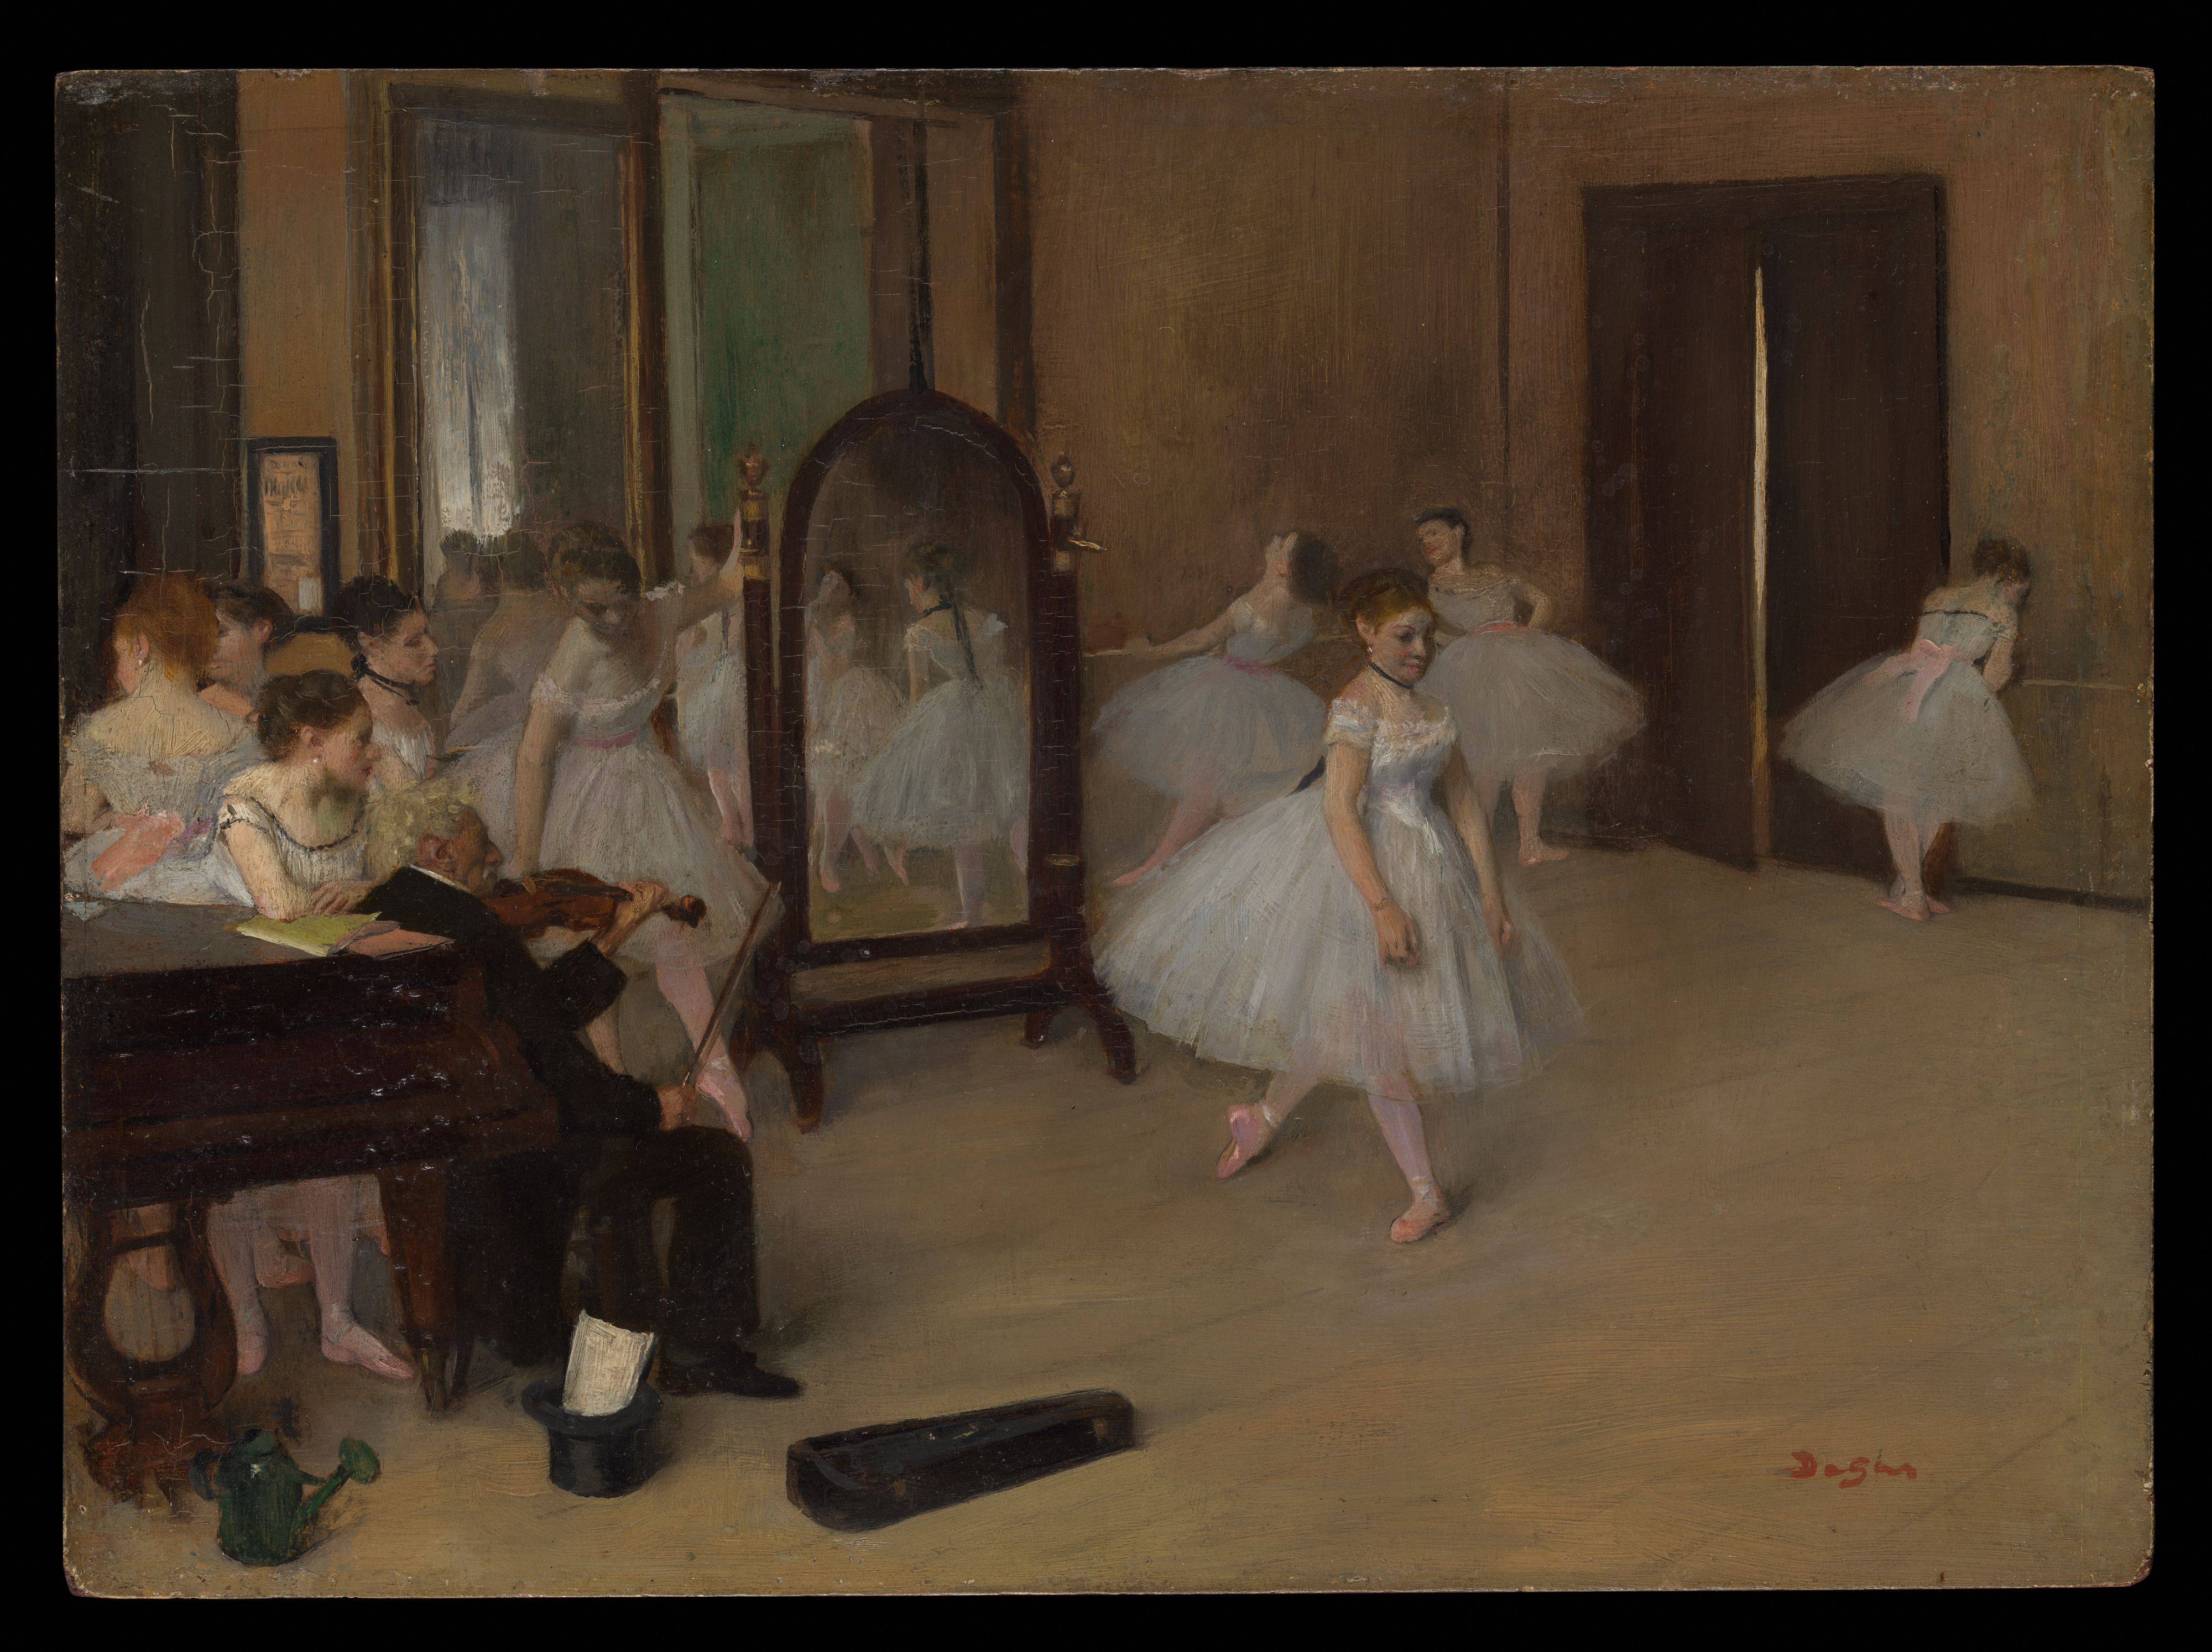 degas ballerinas: Edgar Degas, The Dancing Class, c. 1870, The Metropolitan Museum of Art, New York, NY, USA.